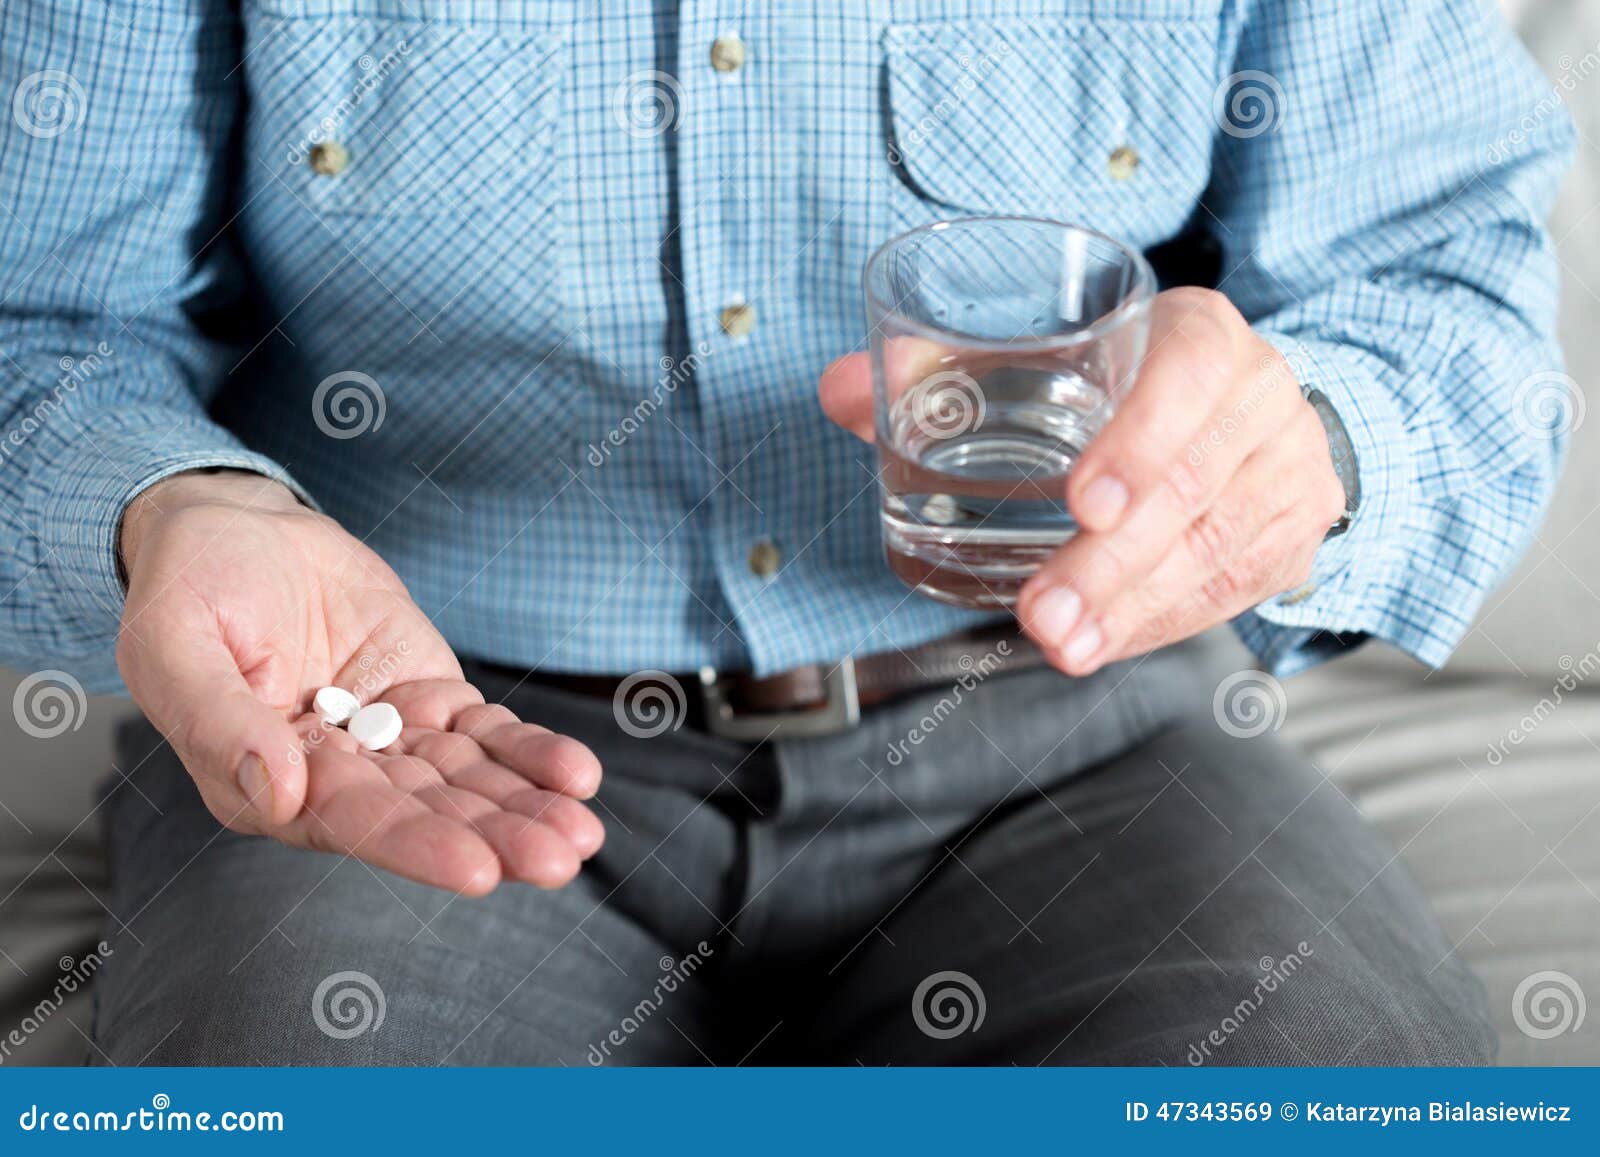 elderly man taking medicament